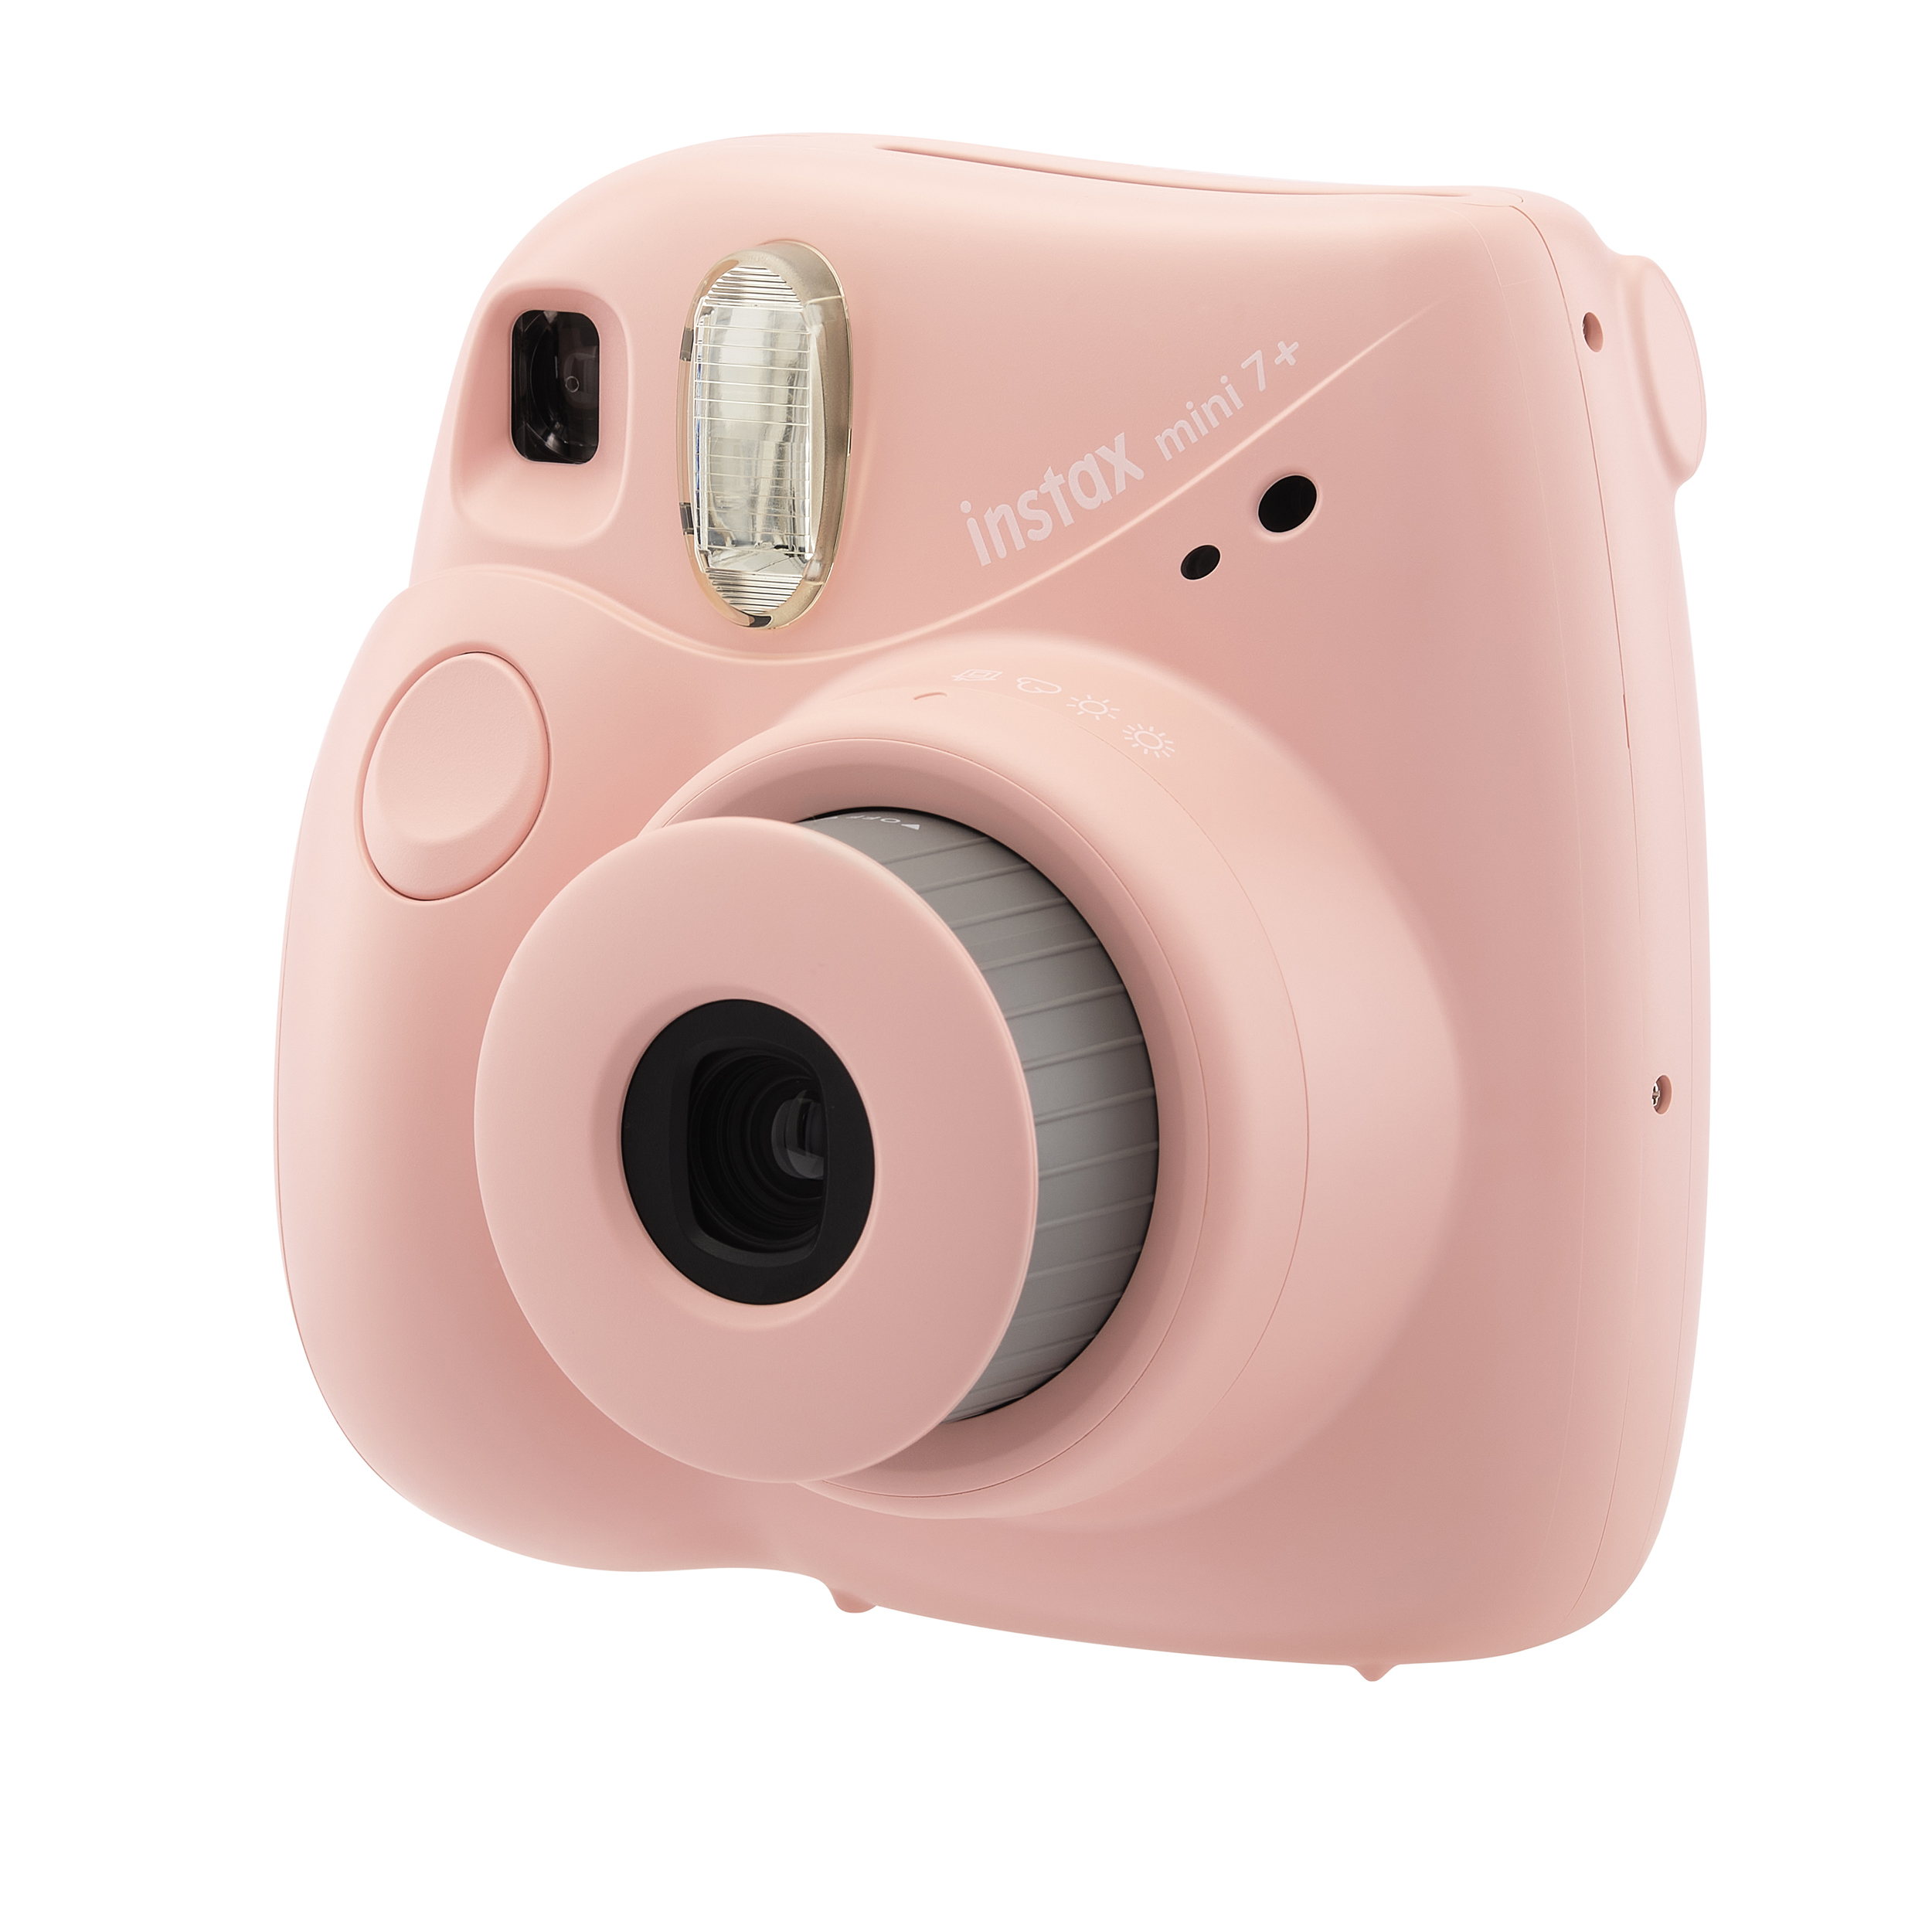 Fujifilm INSTAX Mini 7+ Bundle (10-Pack Film, Album, Camera Case, Stickers), Light Pink, Brand New Condition - image 5 of 11